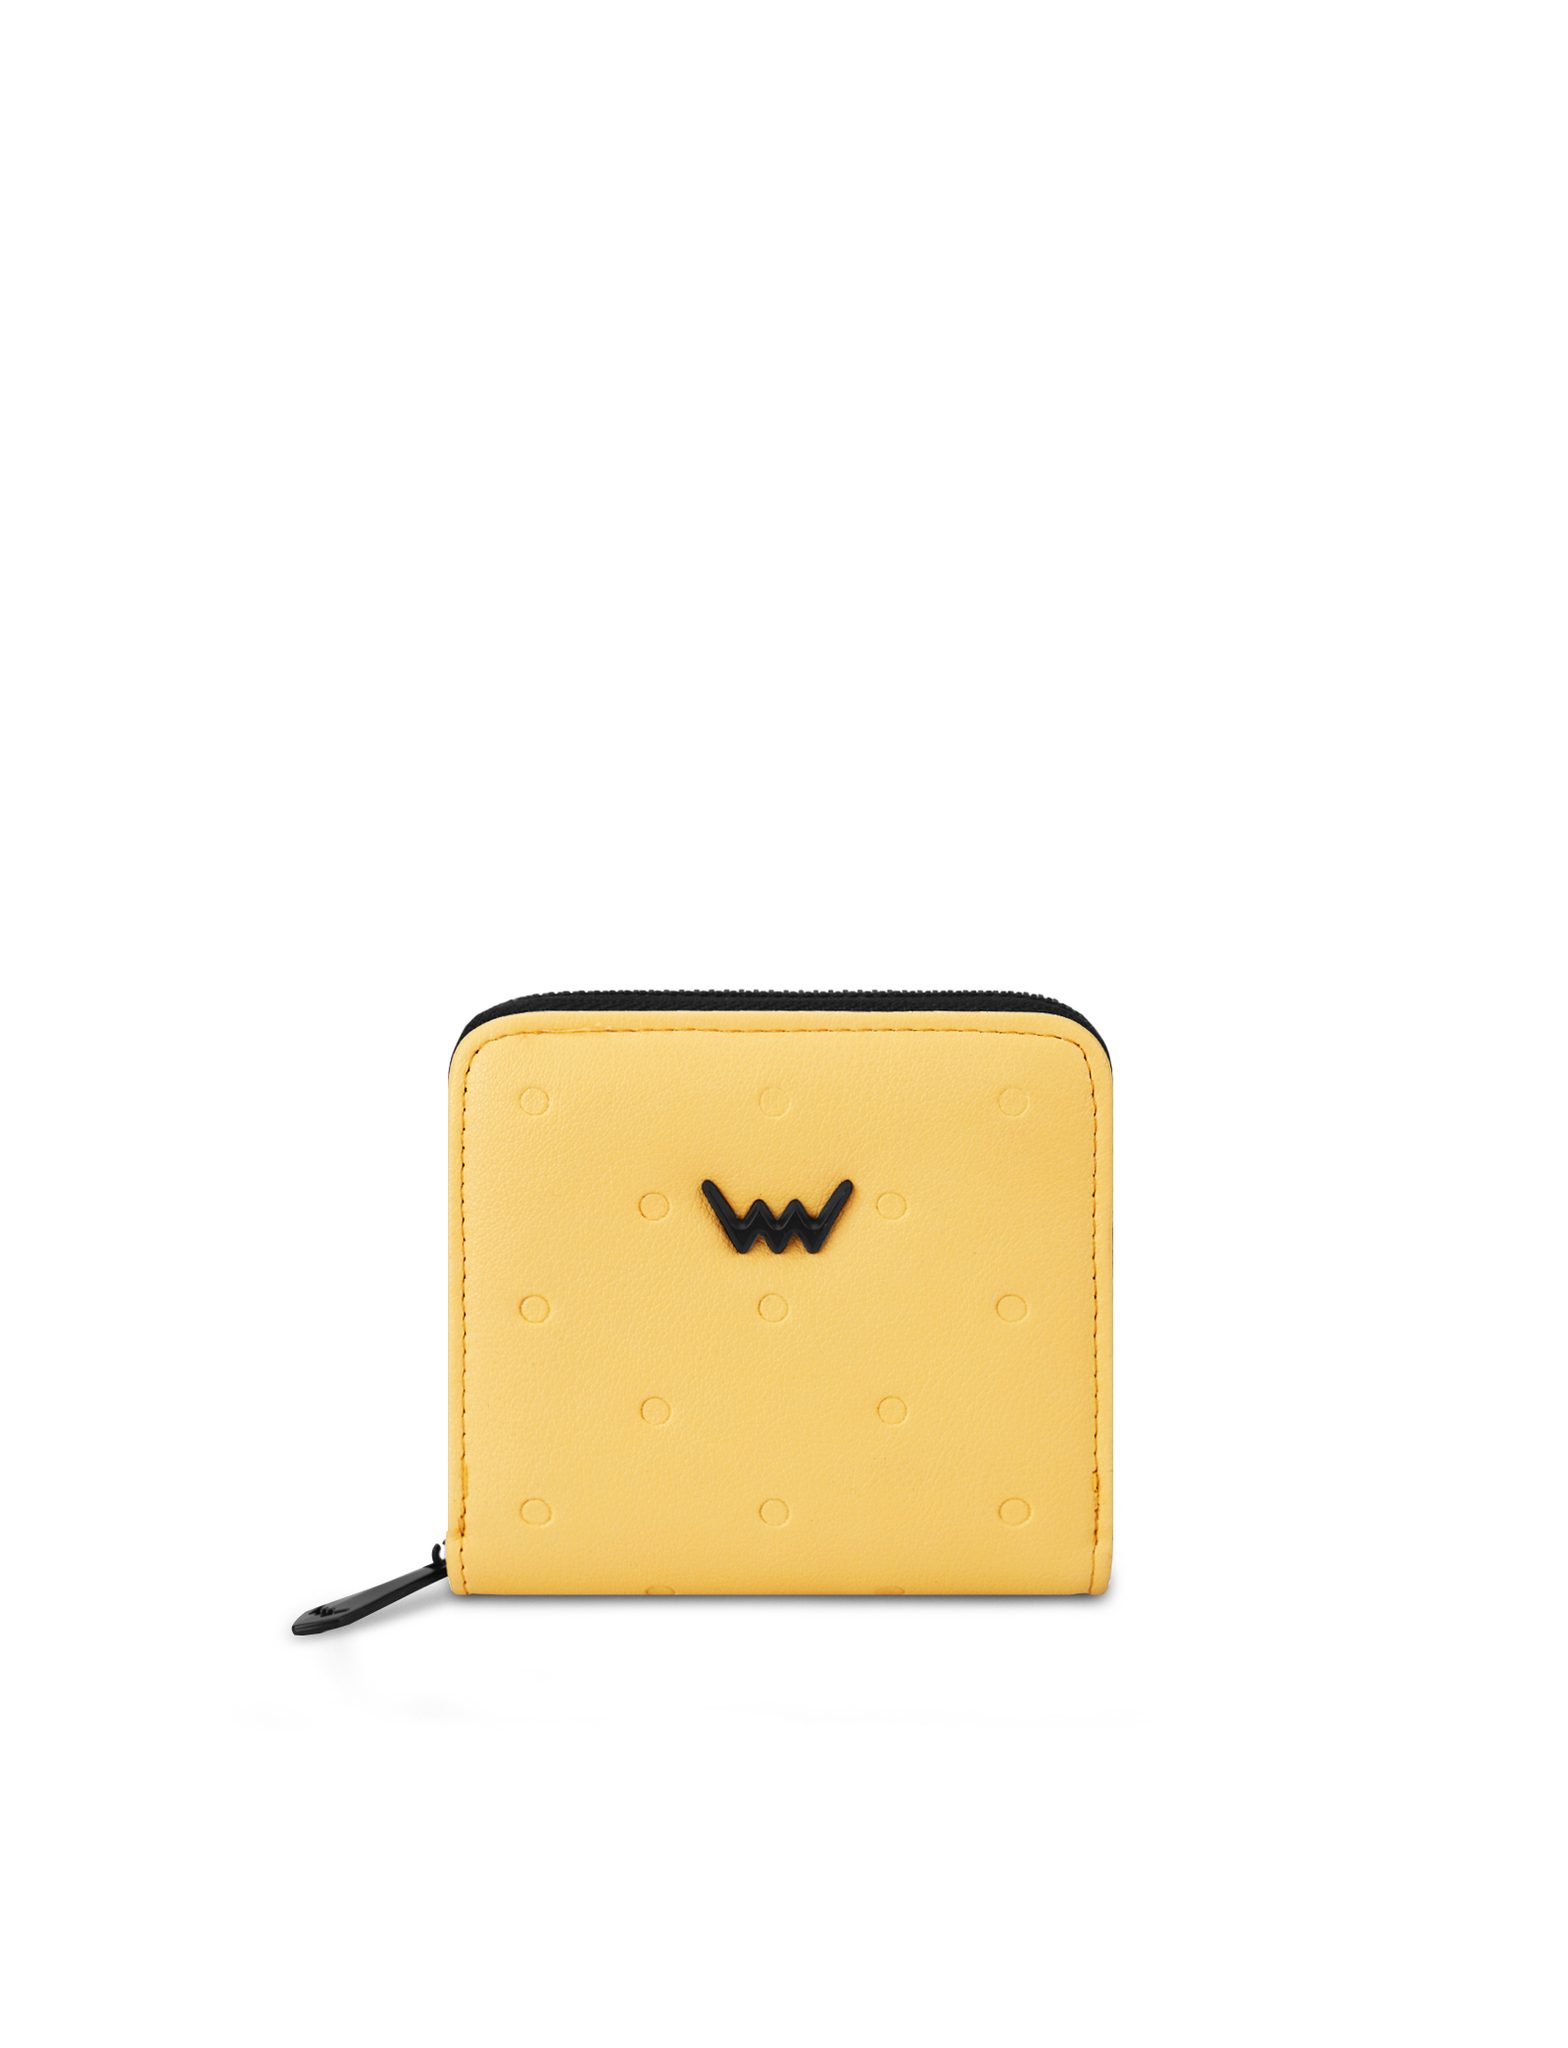 VUCH Charis Mini Yellow Wallet